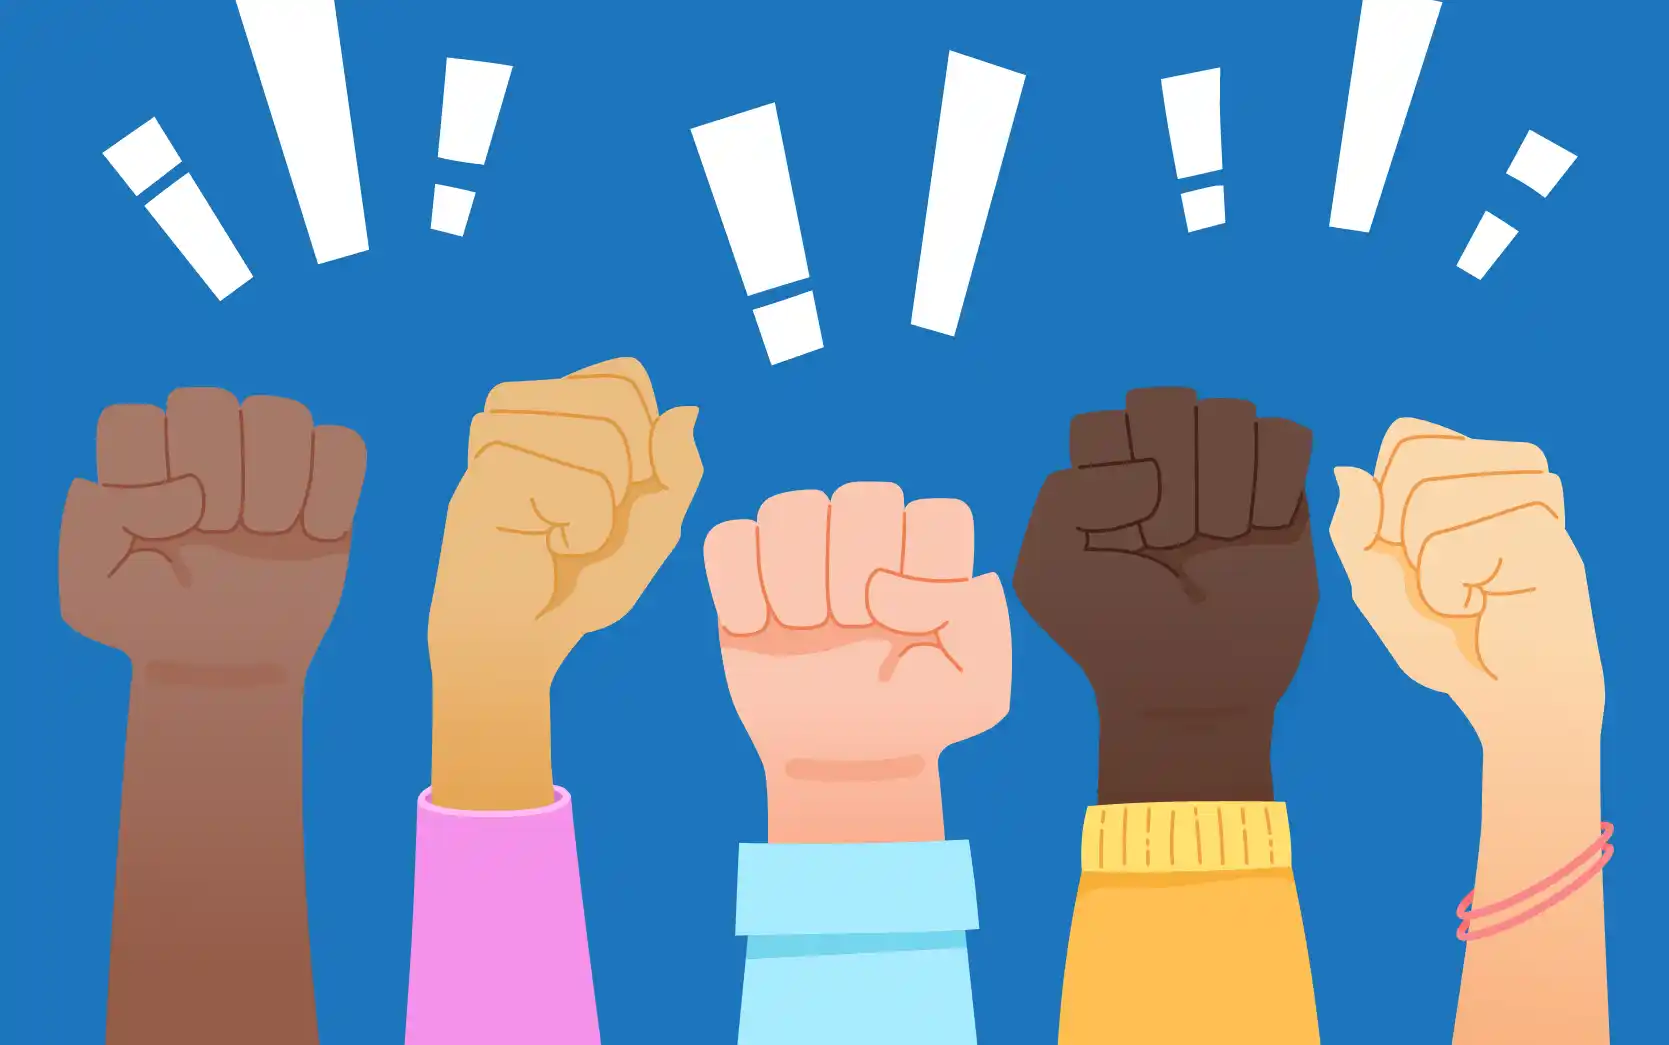 Black Lives Matter - raised fists